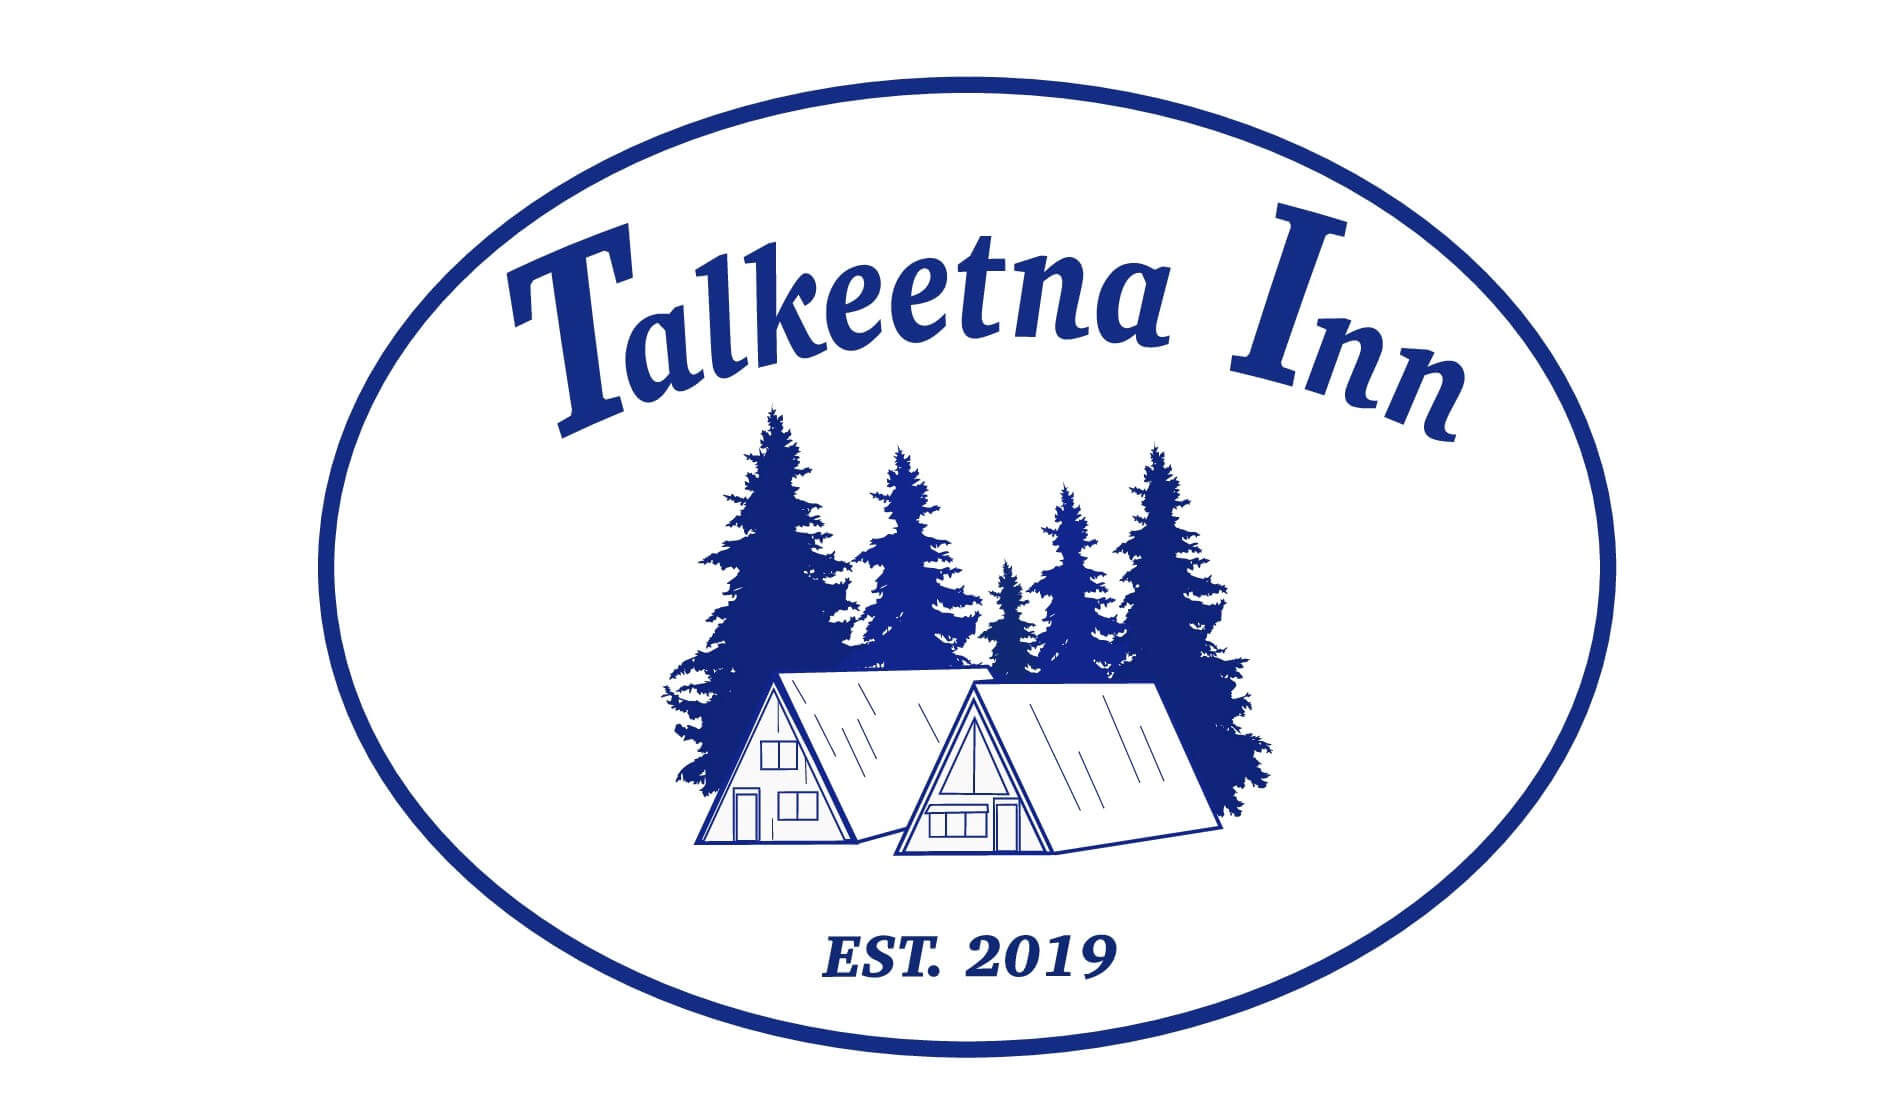 Talkeetna Inn